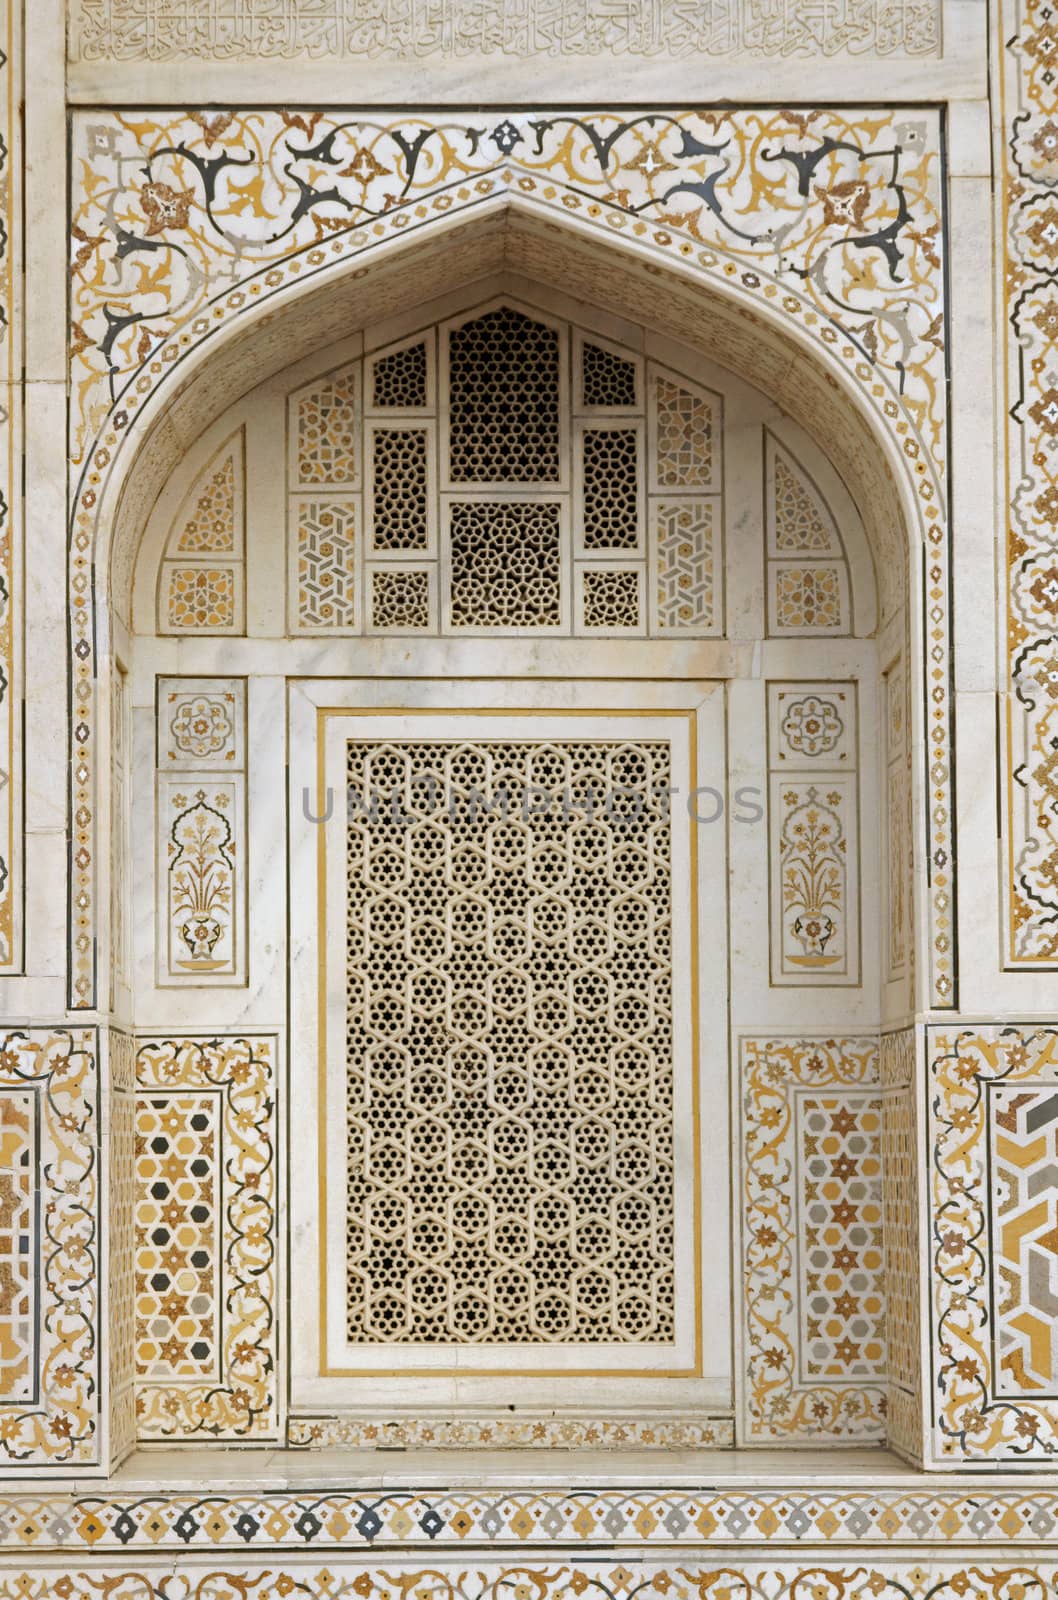 Window arch of the ornate white marble Mughal tomb (I'timad-ud-Daulah). 17th Century AD. Agra, Uttar Pradesh, India